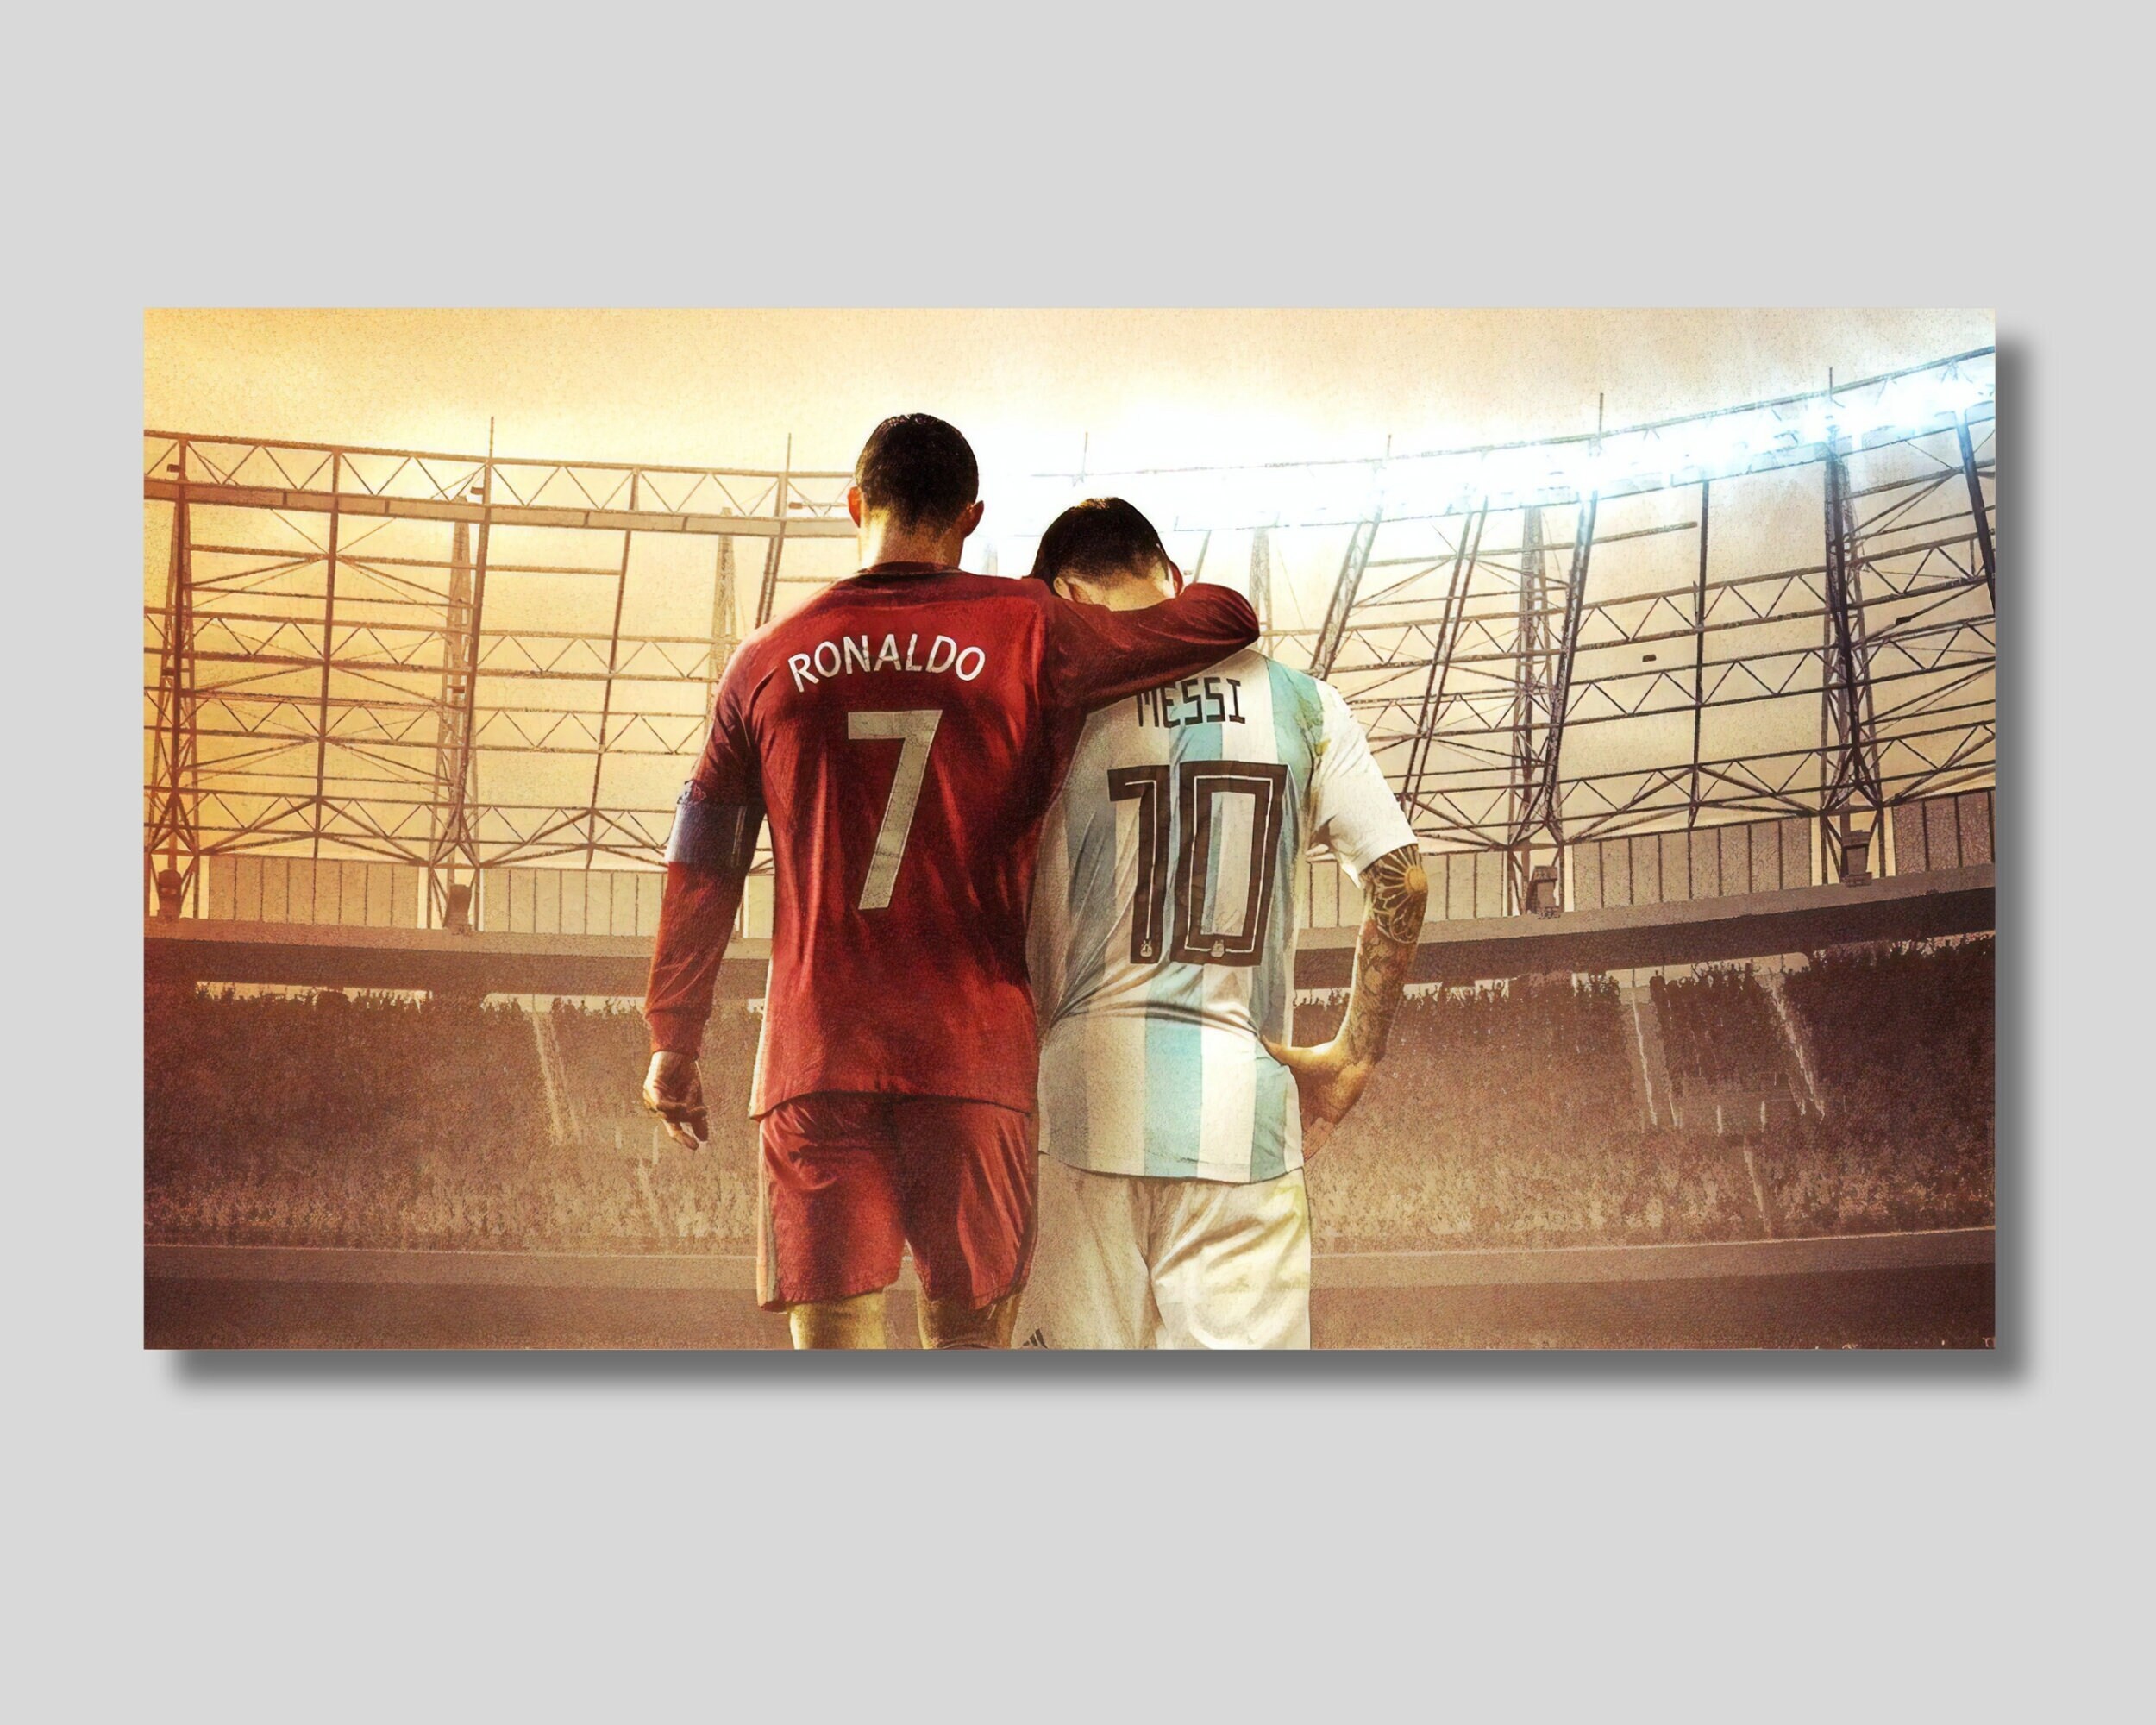  NIOKUM Cristiano Ronaldo And Lionel Messi Poster